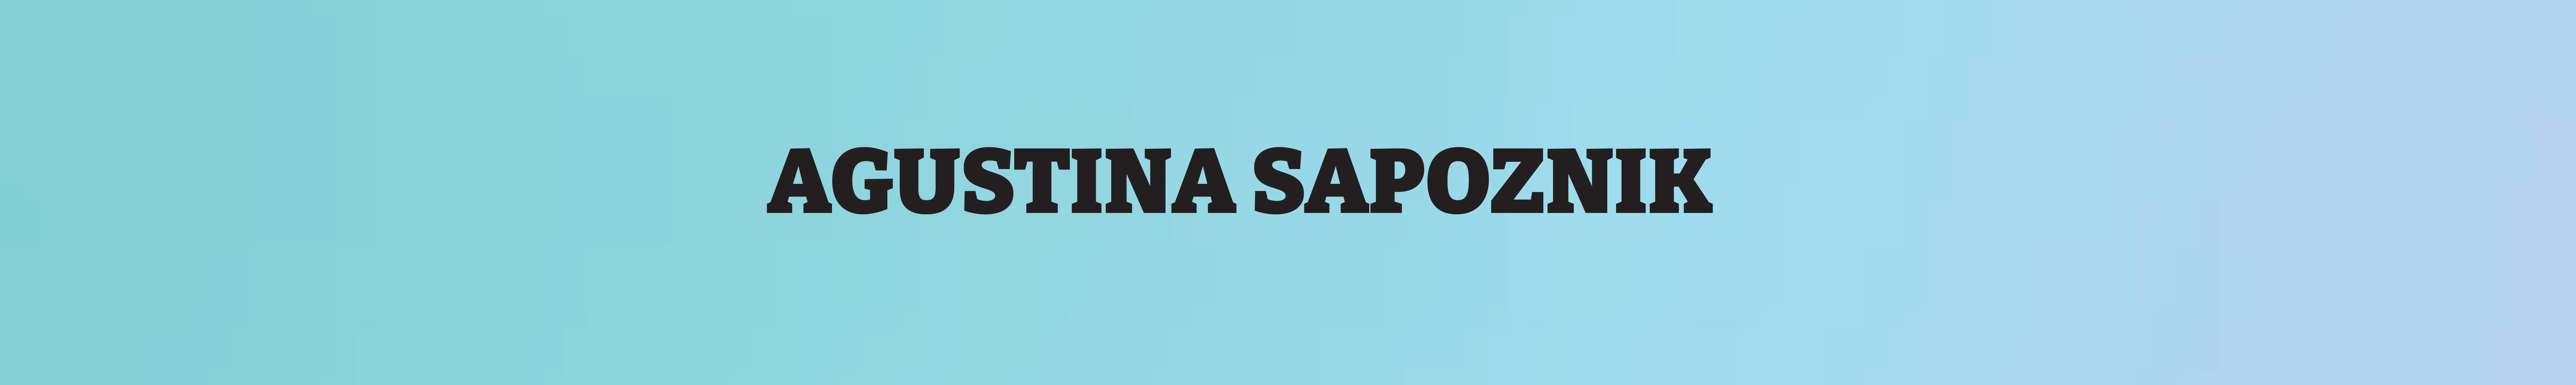 Agustina Sapoznik's profile banner